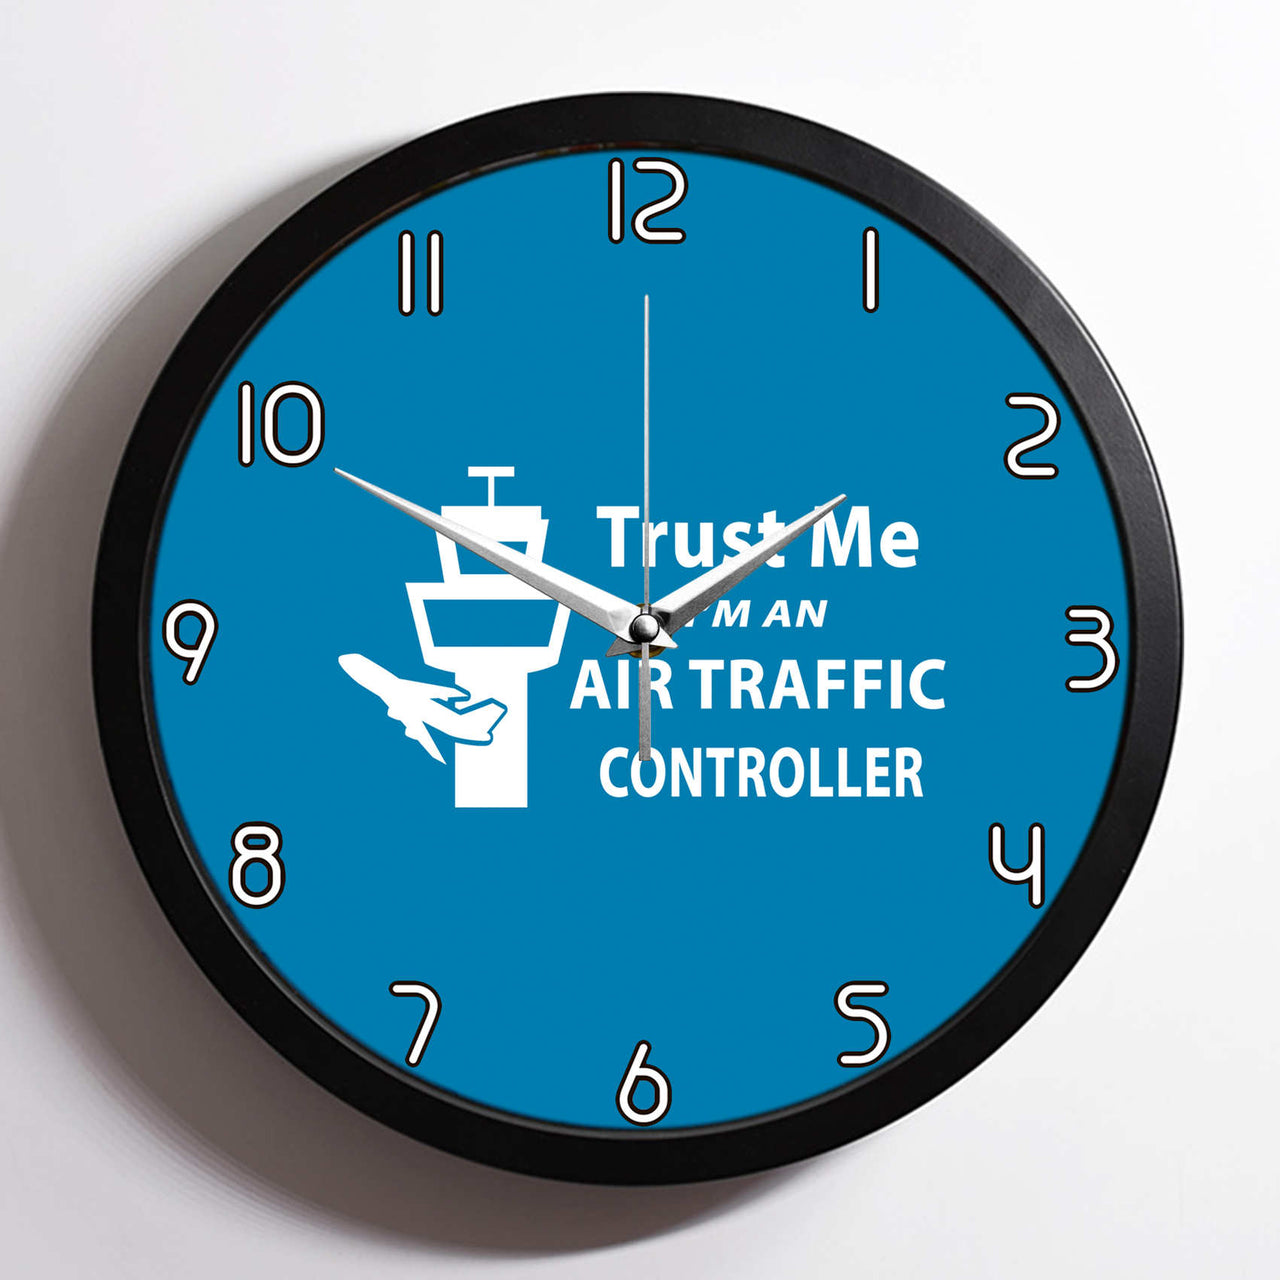 Trust Me I'm an Air Traffic Controller Designed Wall Clocks